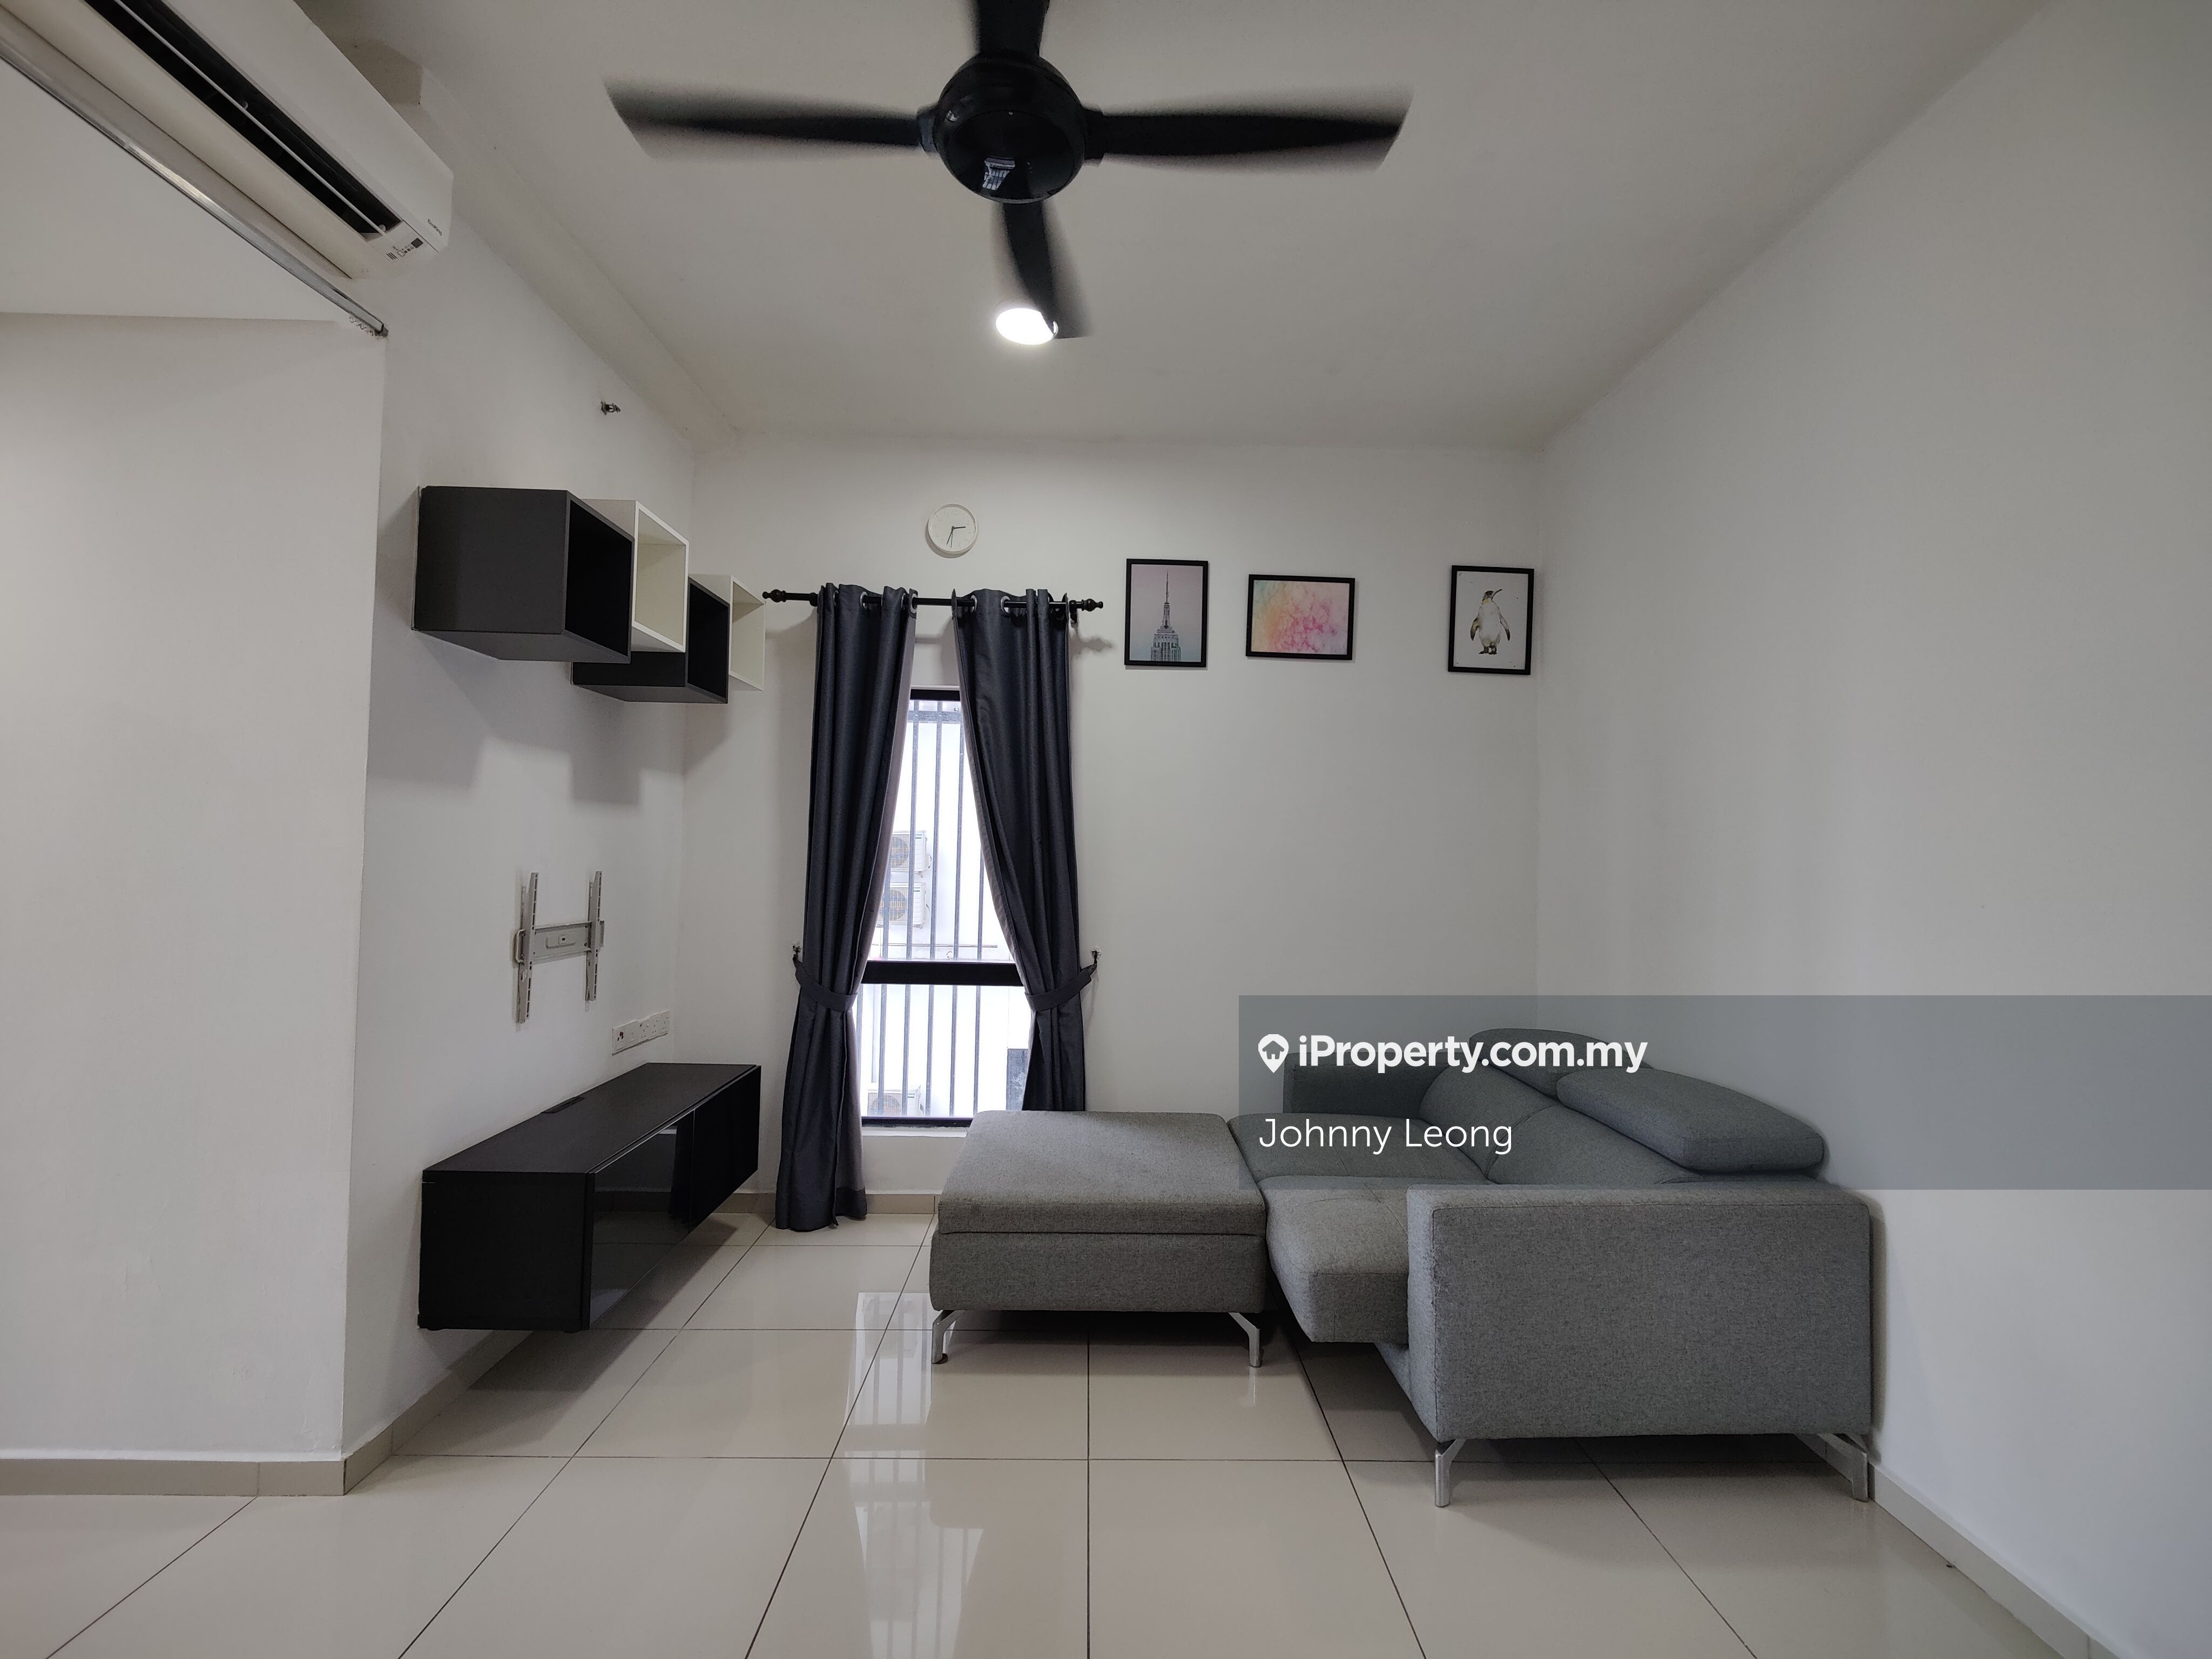 Centrus Soho Soho Serviced Residence 1 bedroom for rent in Cyberjaya ...